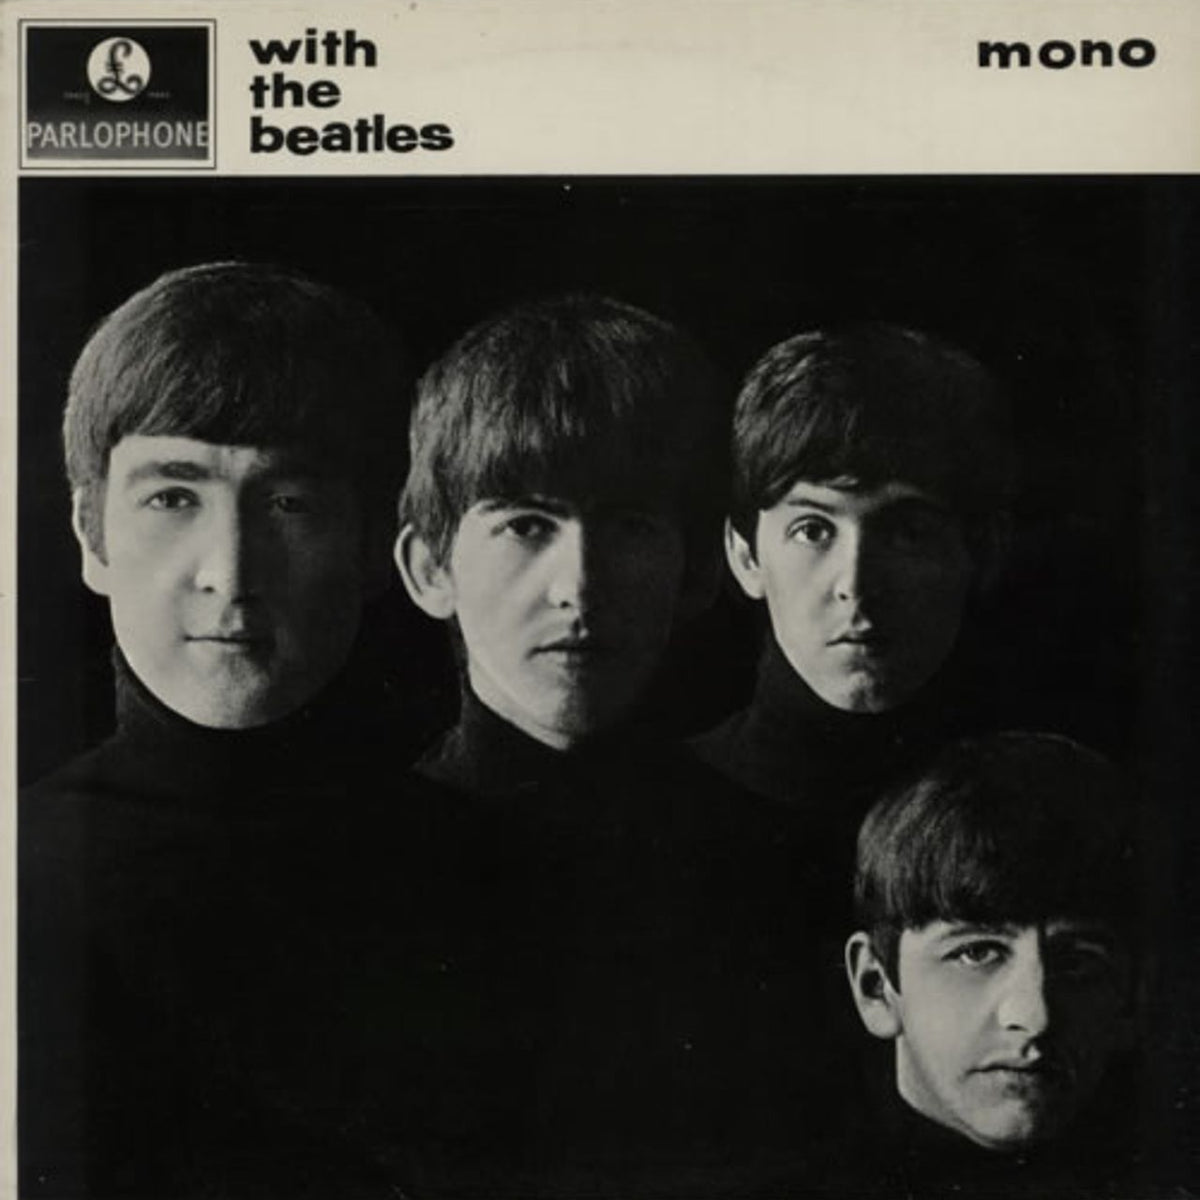 The Beatles With The Beatles - 80s UK Vinyl LP — RareVinyl.com